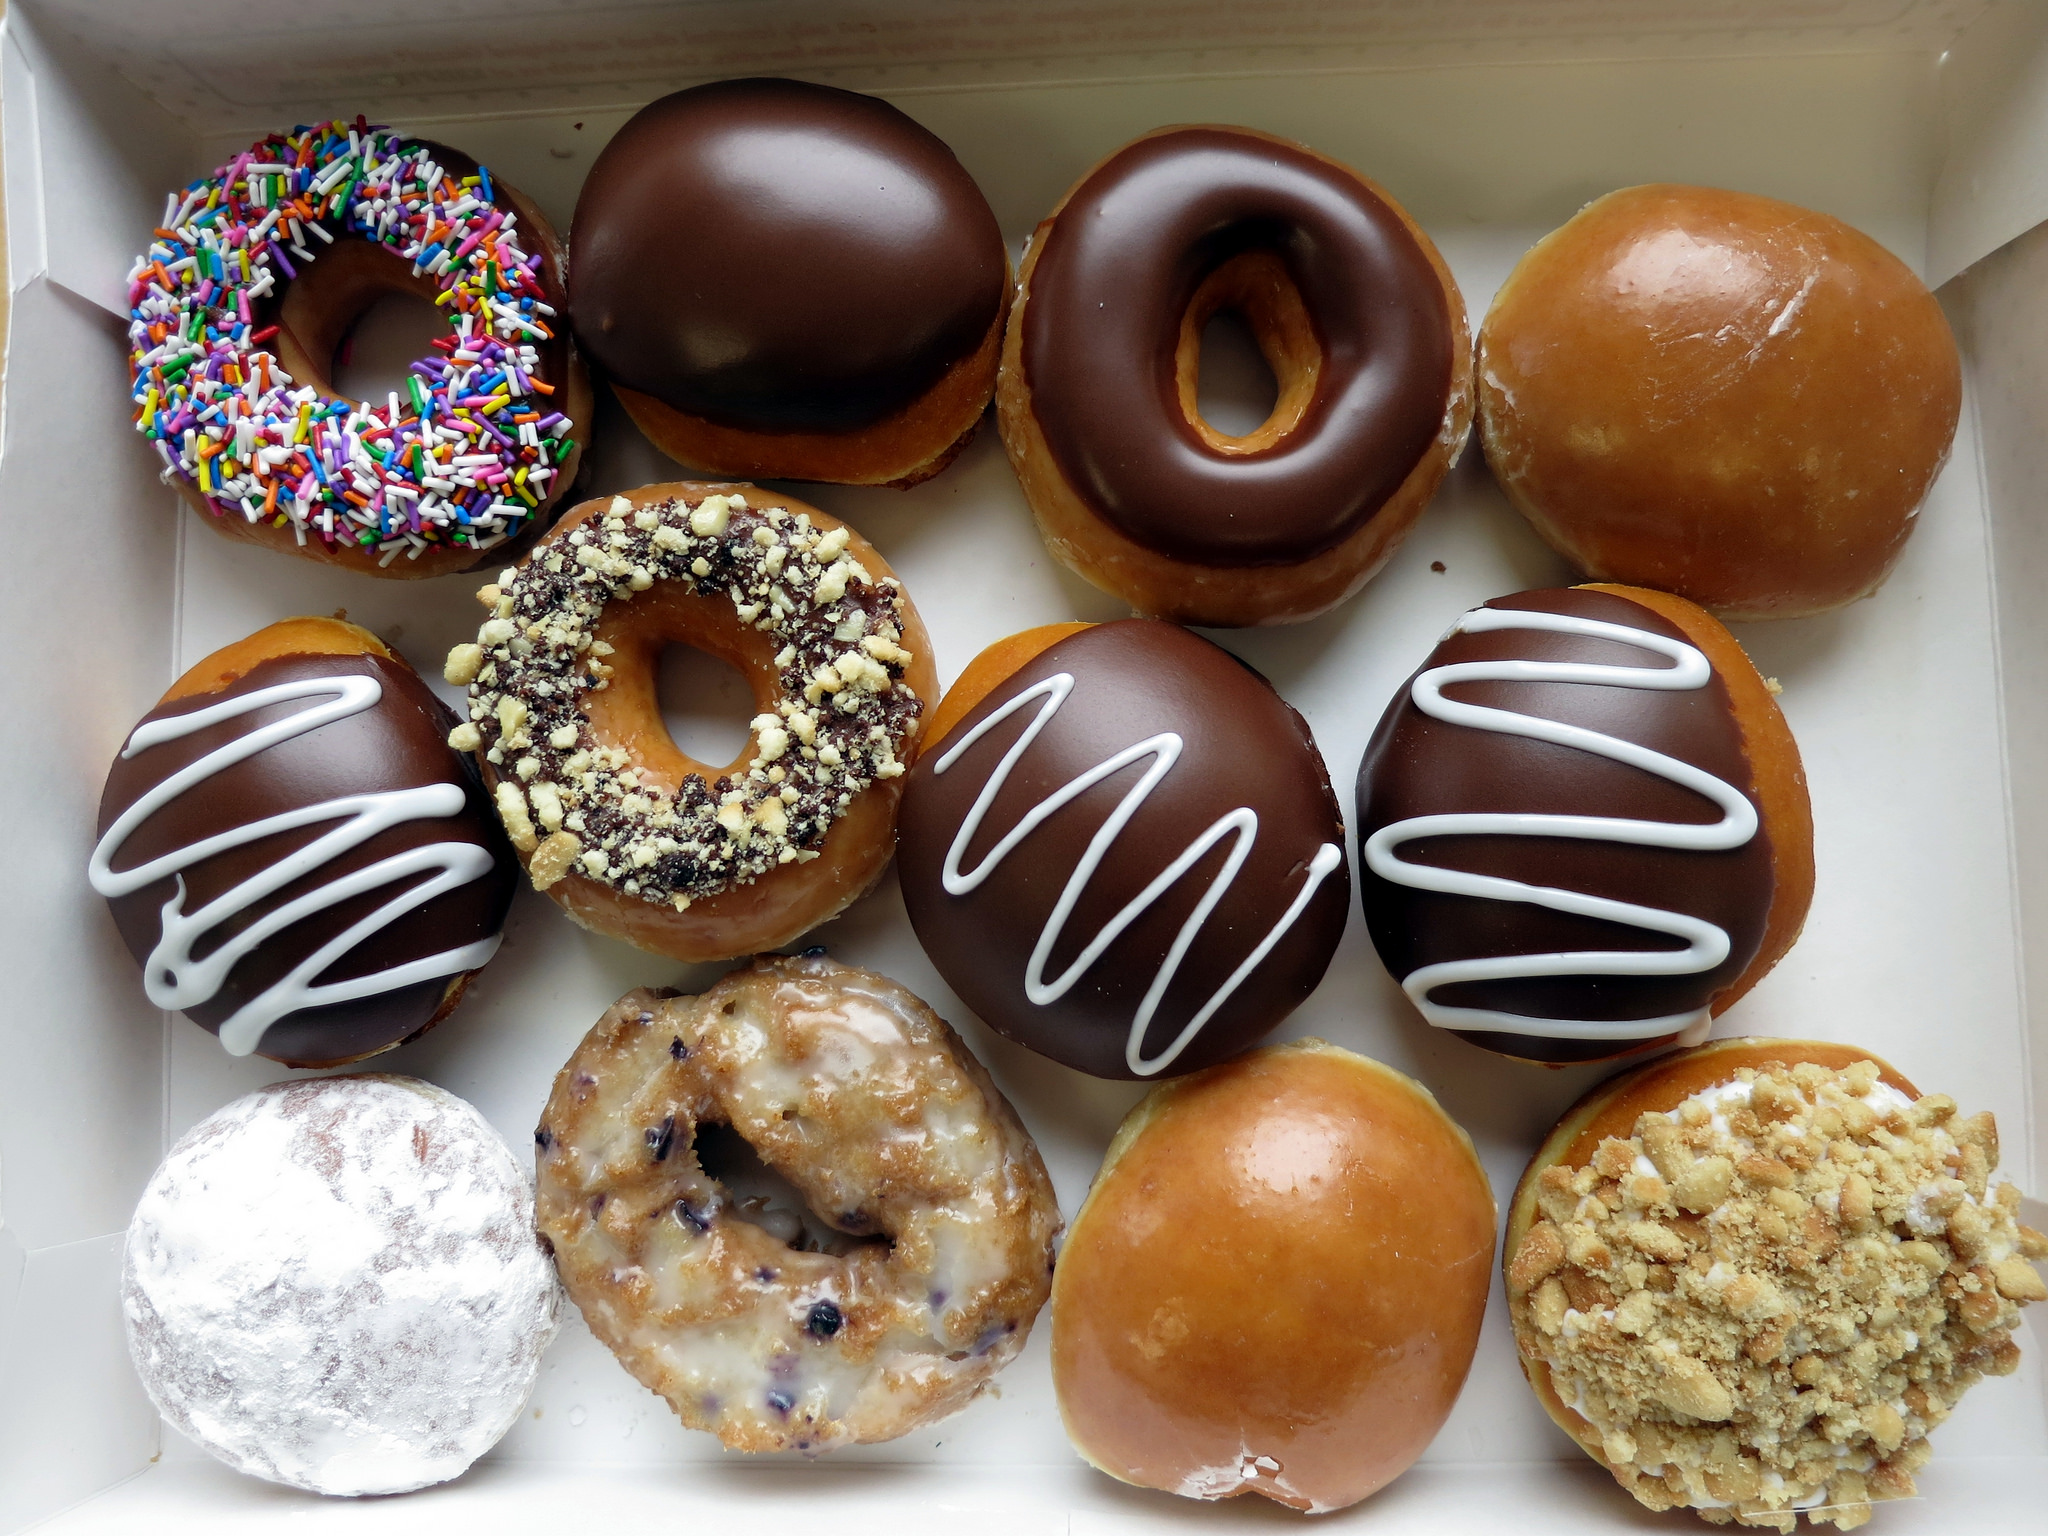 A Krispy Kreme selection. Photo: Flickr / Ruth Hartnup